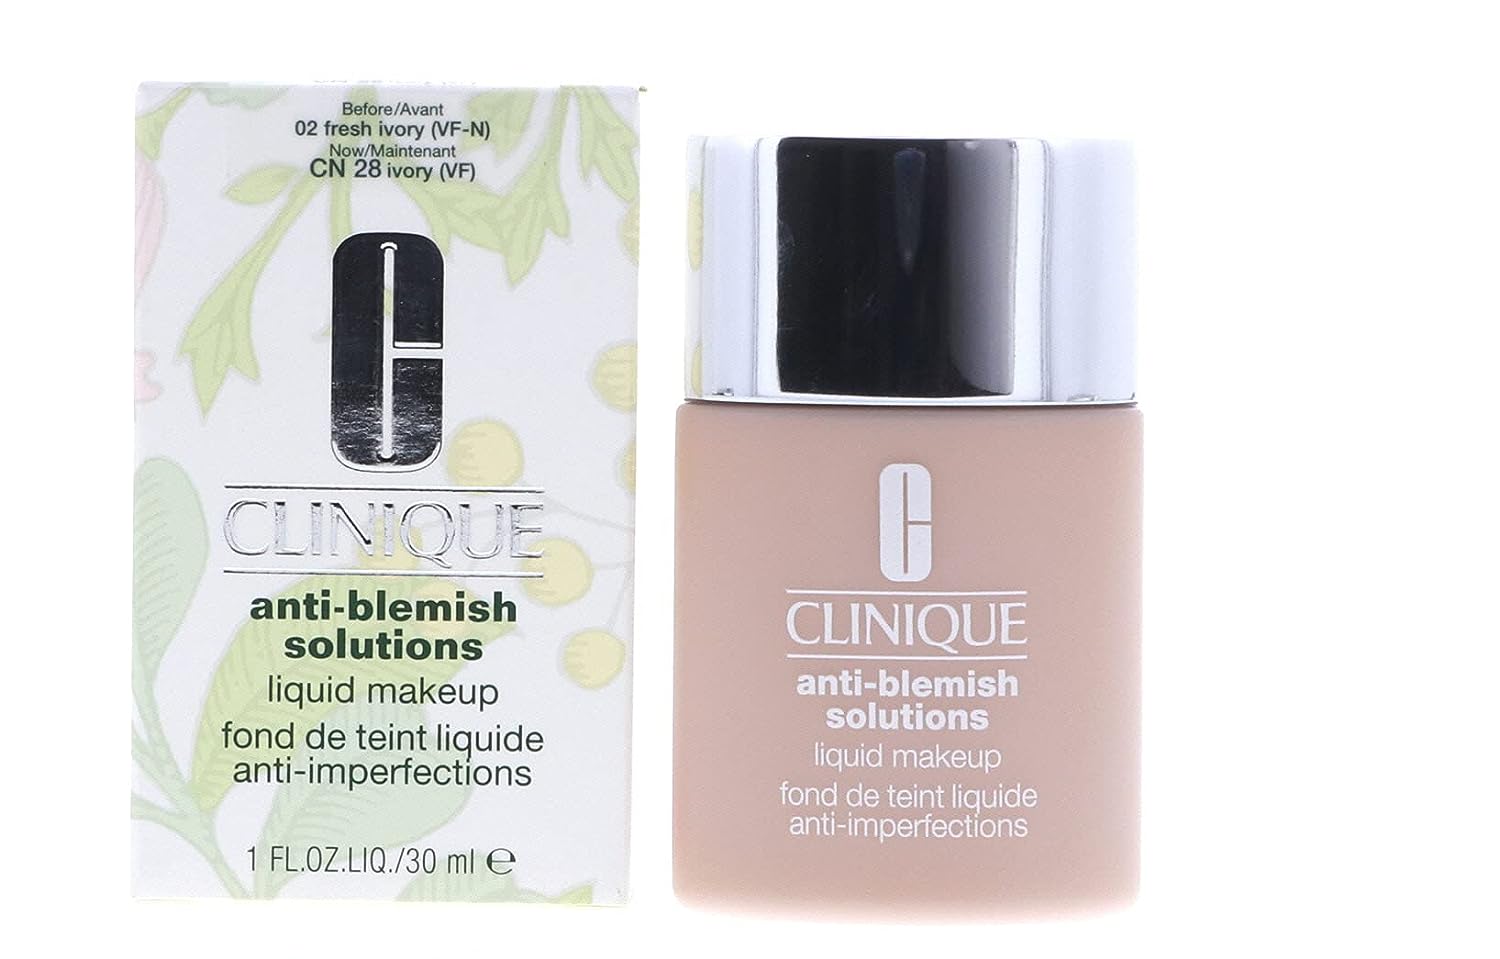 ''NEW! Clinique Acne Solutions Liquid Makeup, 1 oz / 30 ml, 02 Fresh Ivory (VF-N)''